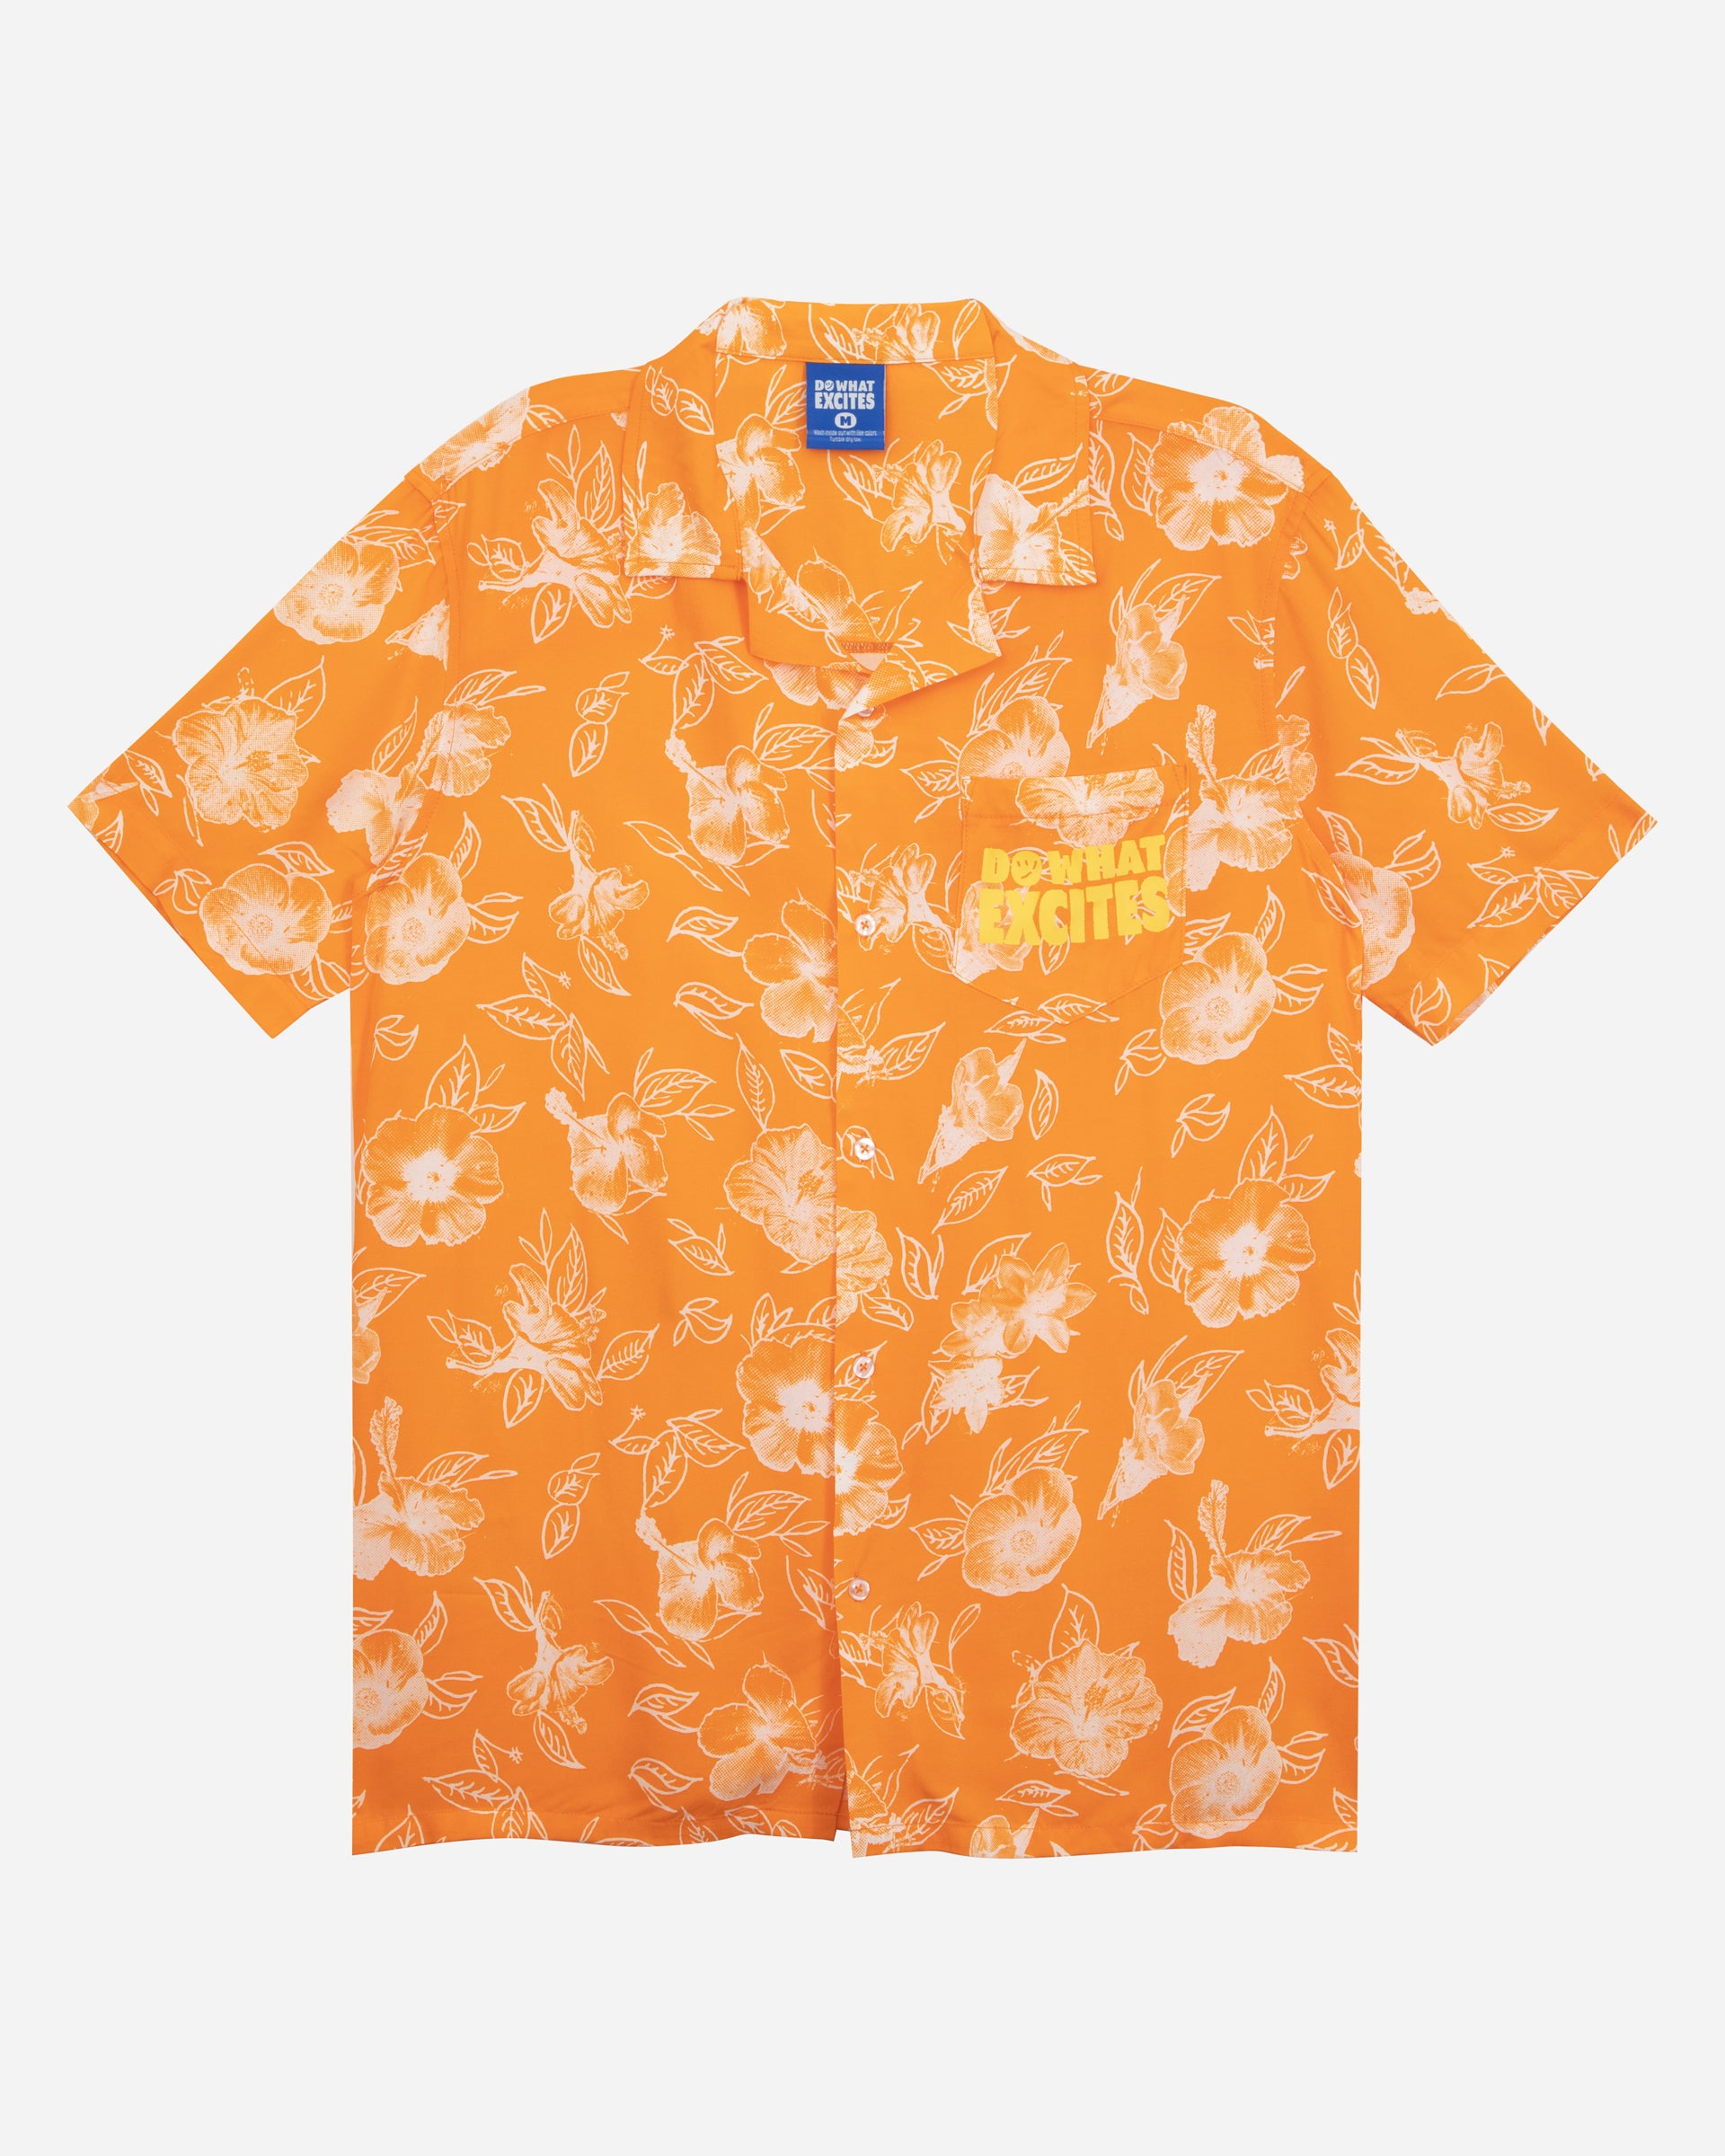 Floral Print | Orange Button Up